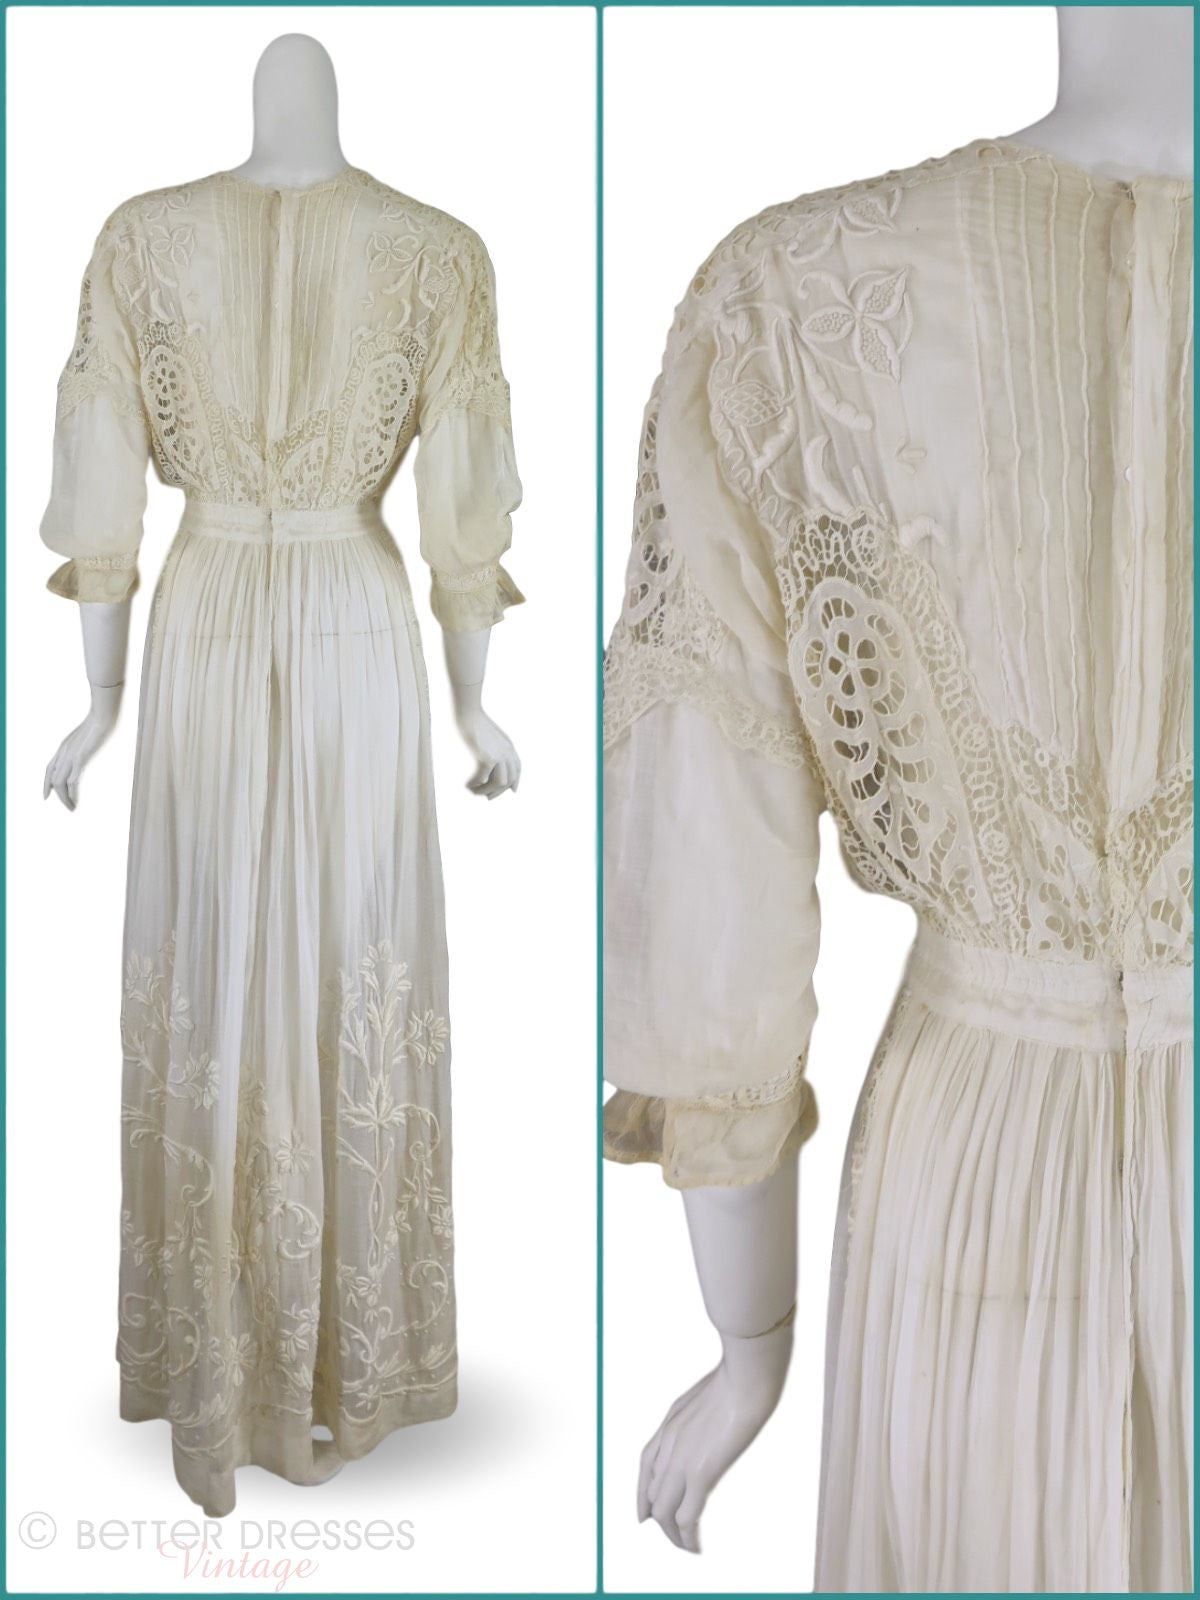 Edwardian White Woven Cotton Muslin Lace Crochet Button Trim Tea Gown Dress